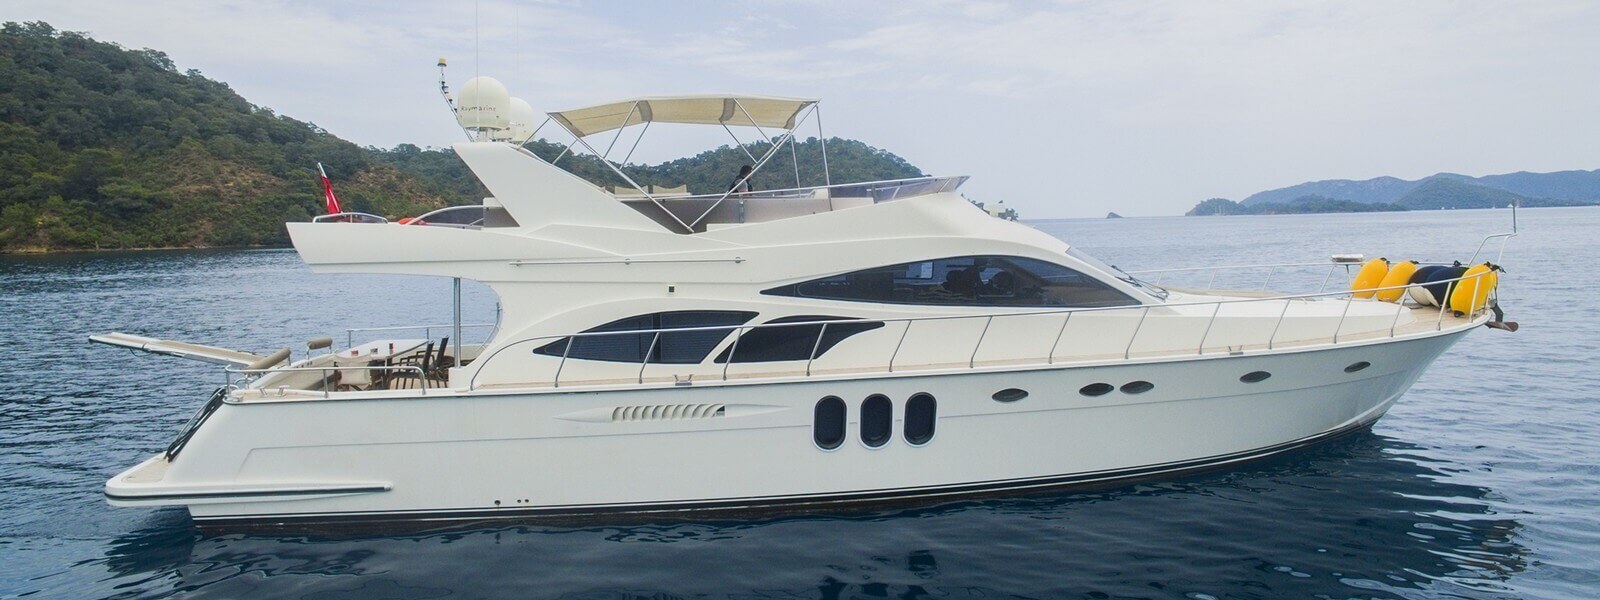 Poyraz Yacht Header